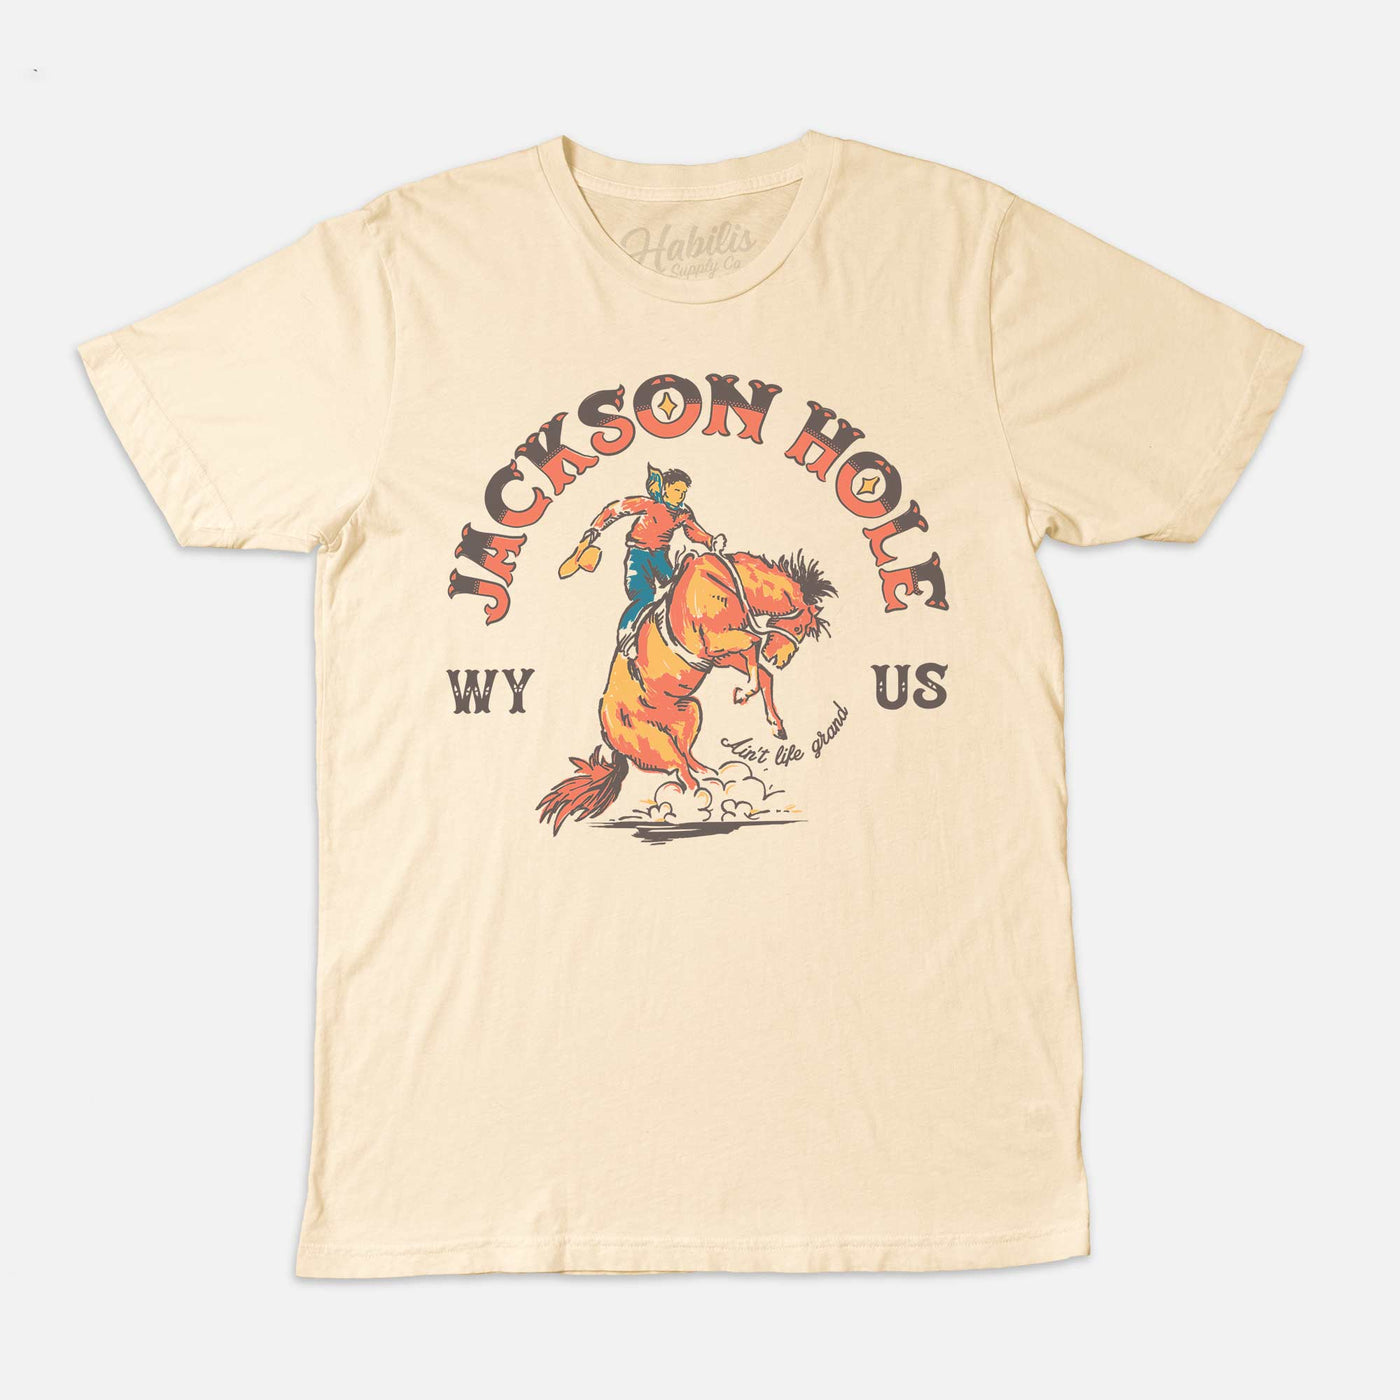 Jackson Hole, Wyoming T-Shirt- USA Made /100% Cotton